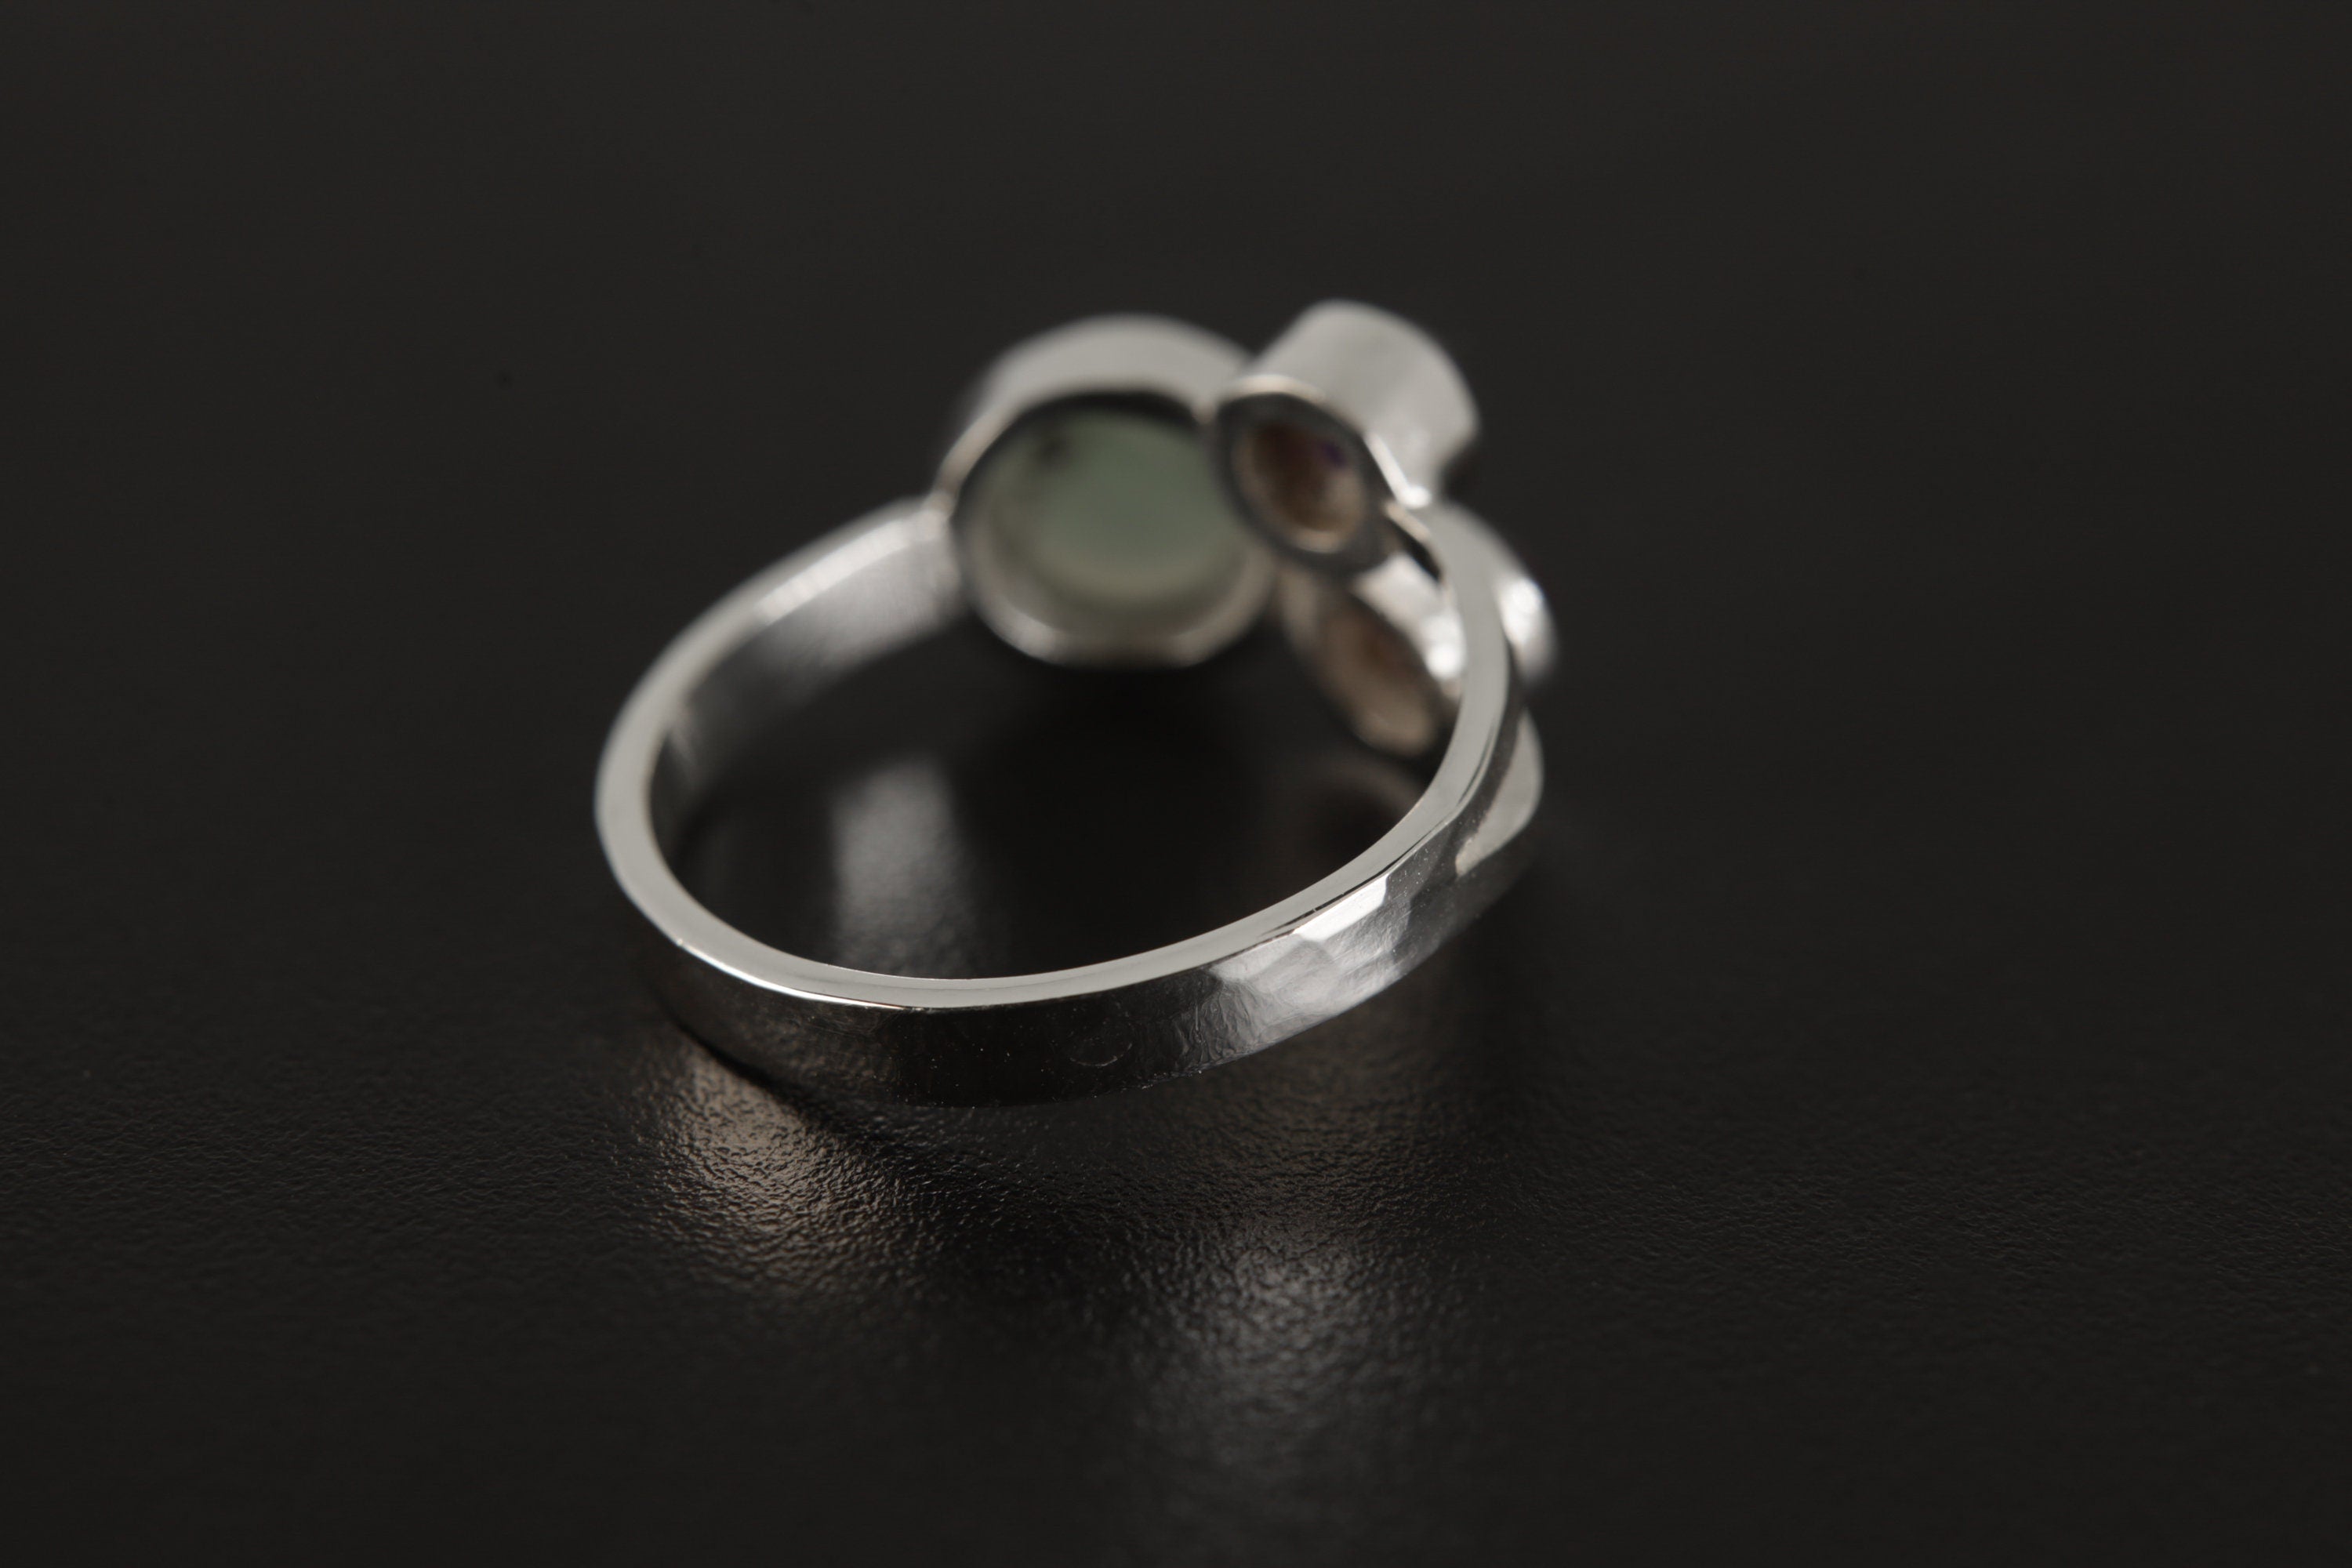 Amethyst & Aquamarine Harmony - Ring Adjustable - Sterling Silver Ring - Unisex - Size 5-12 US